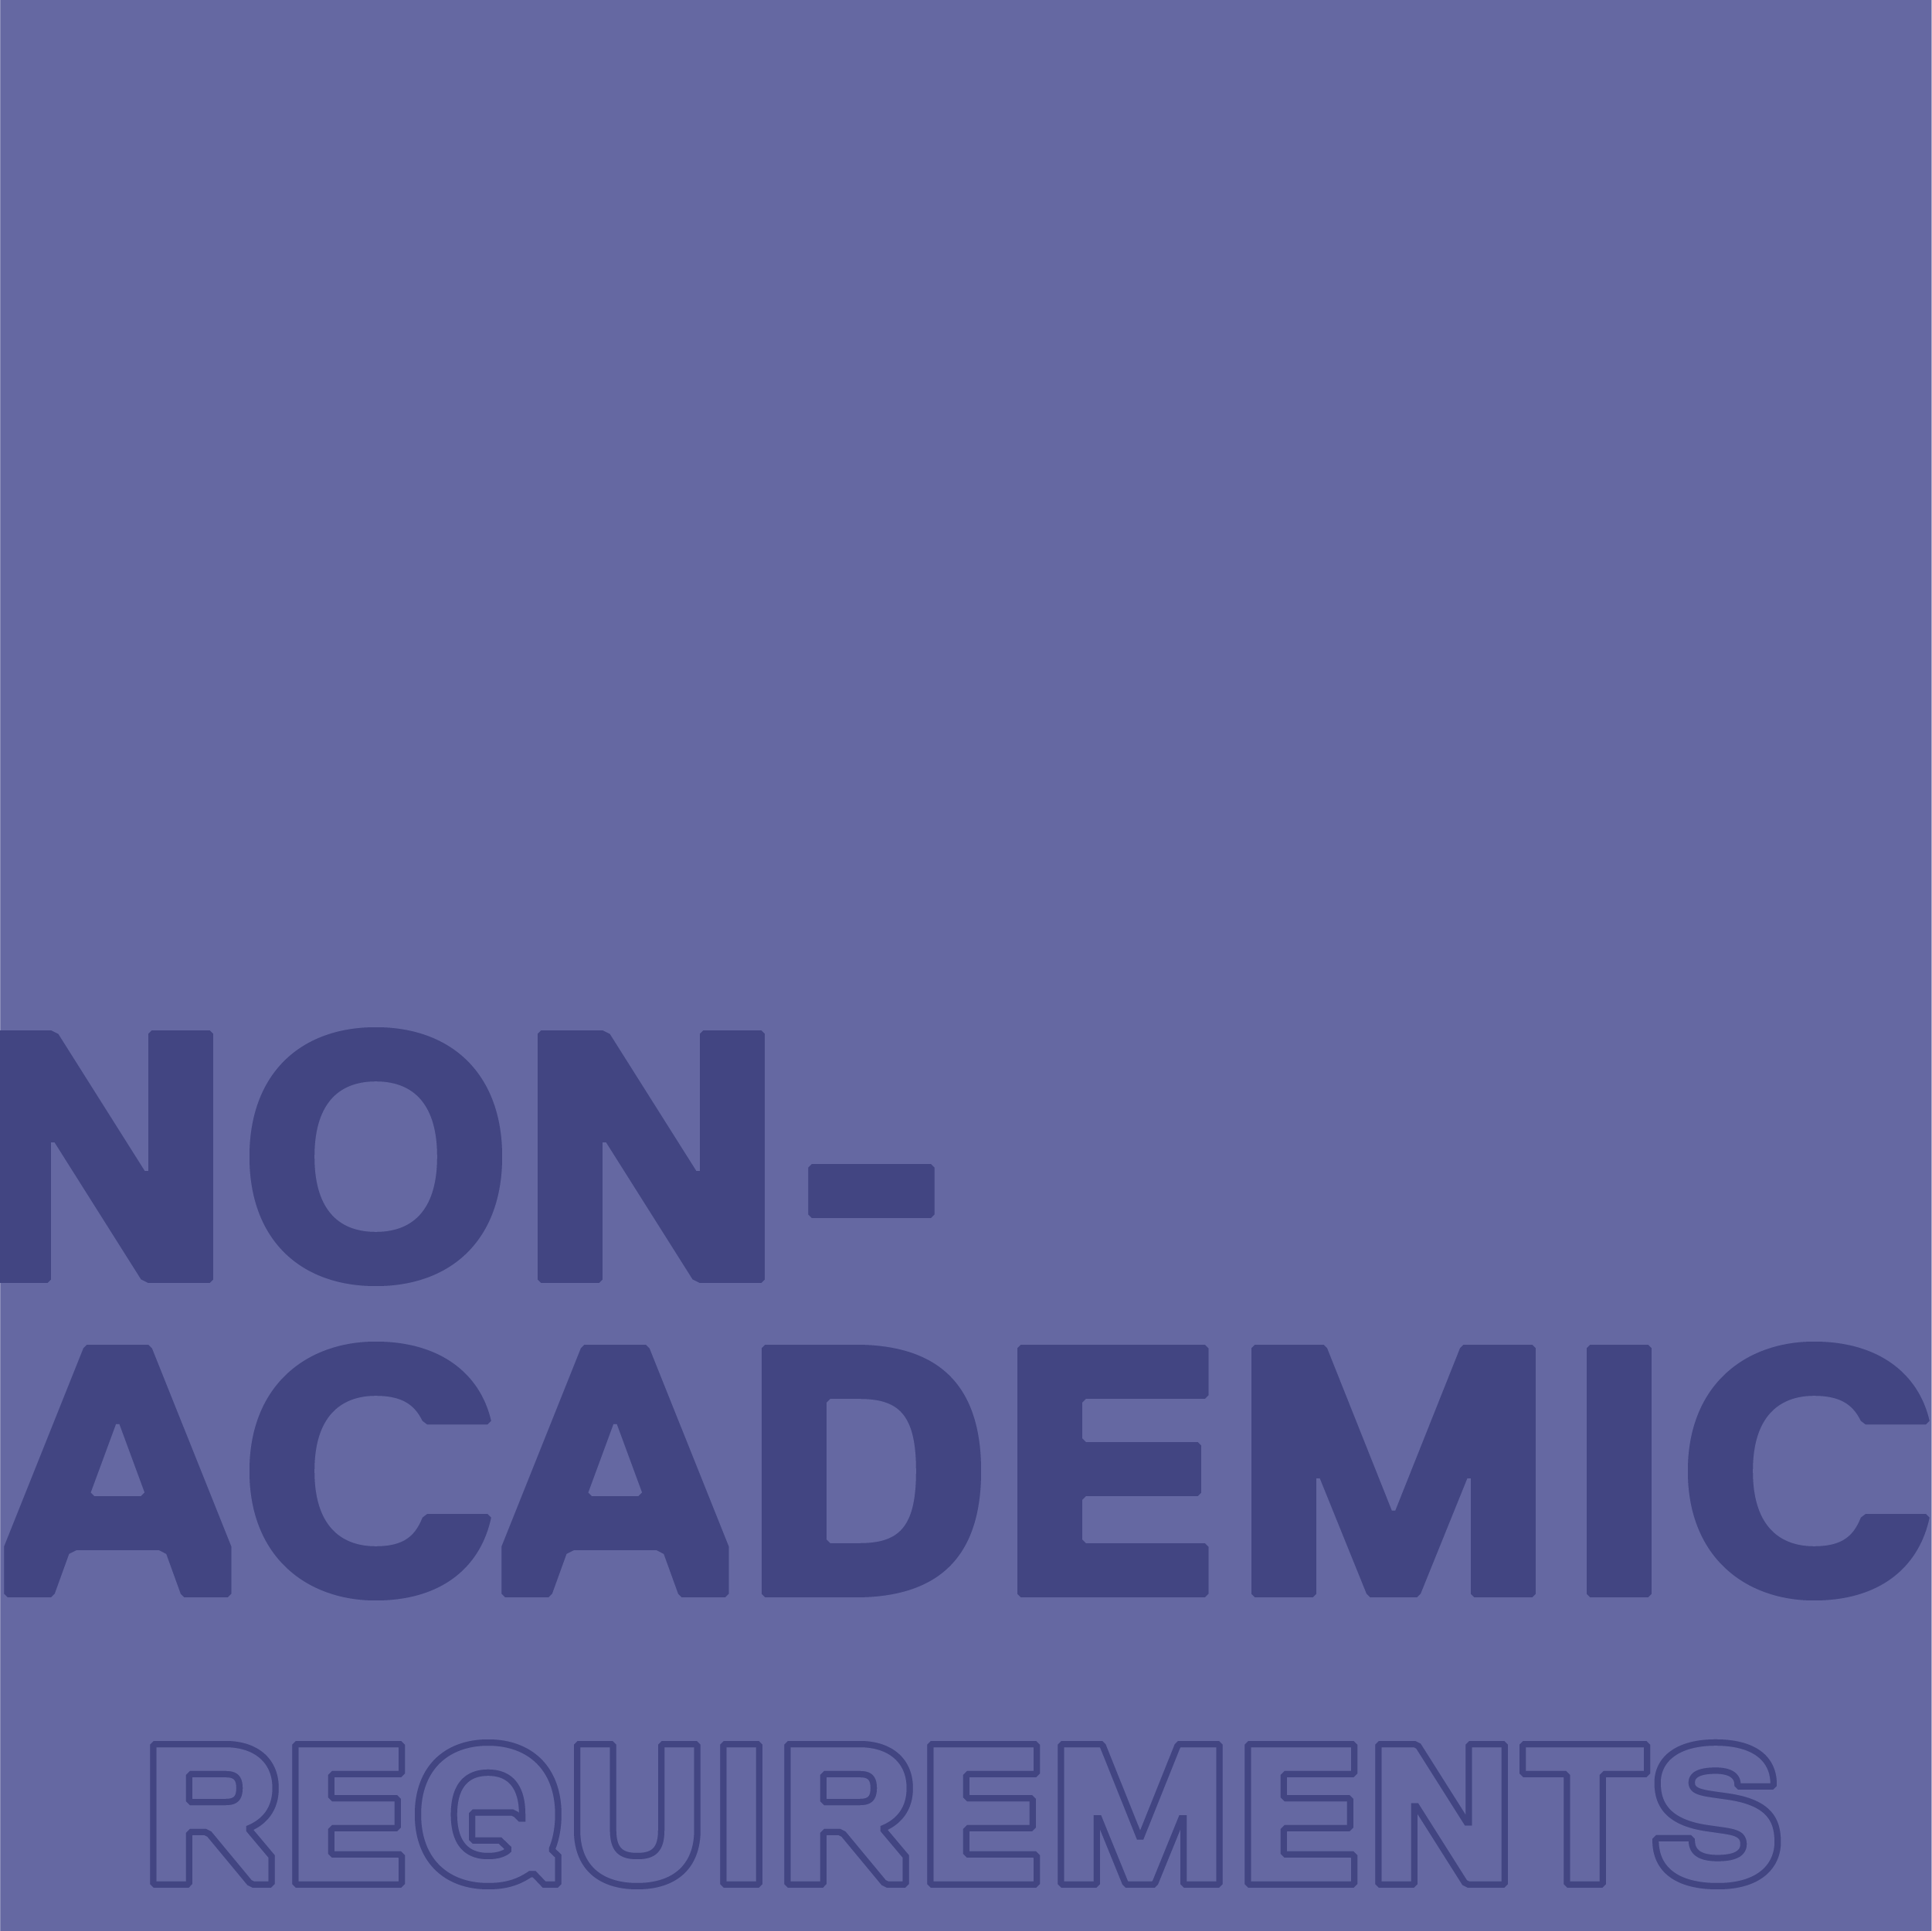 Non-Academic Requirements